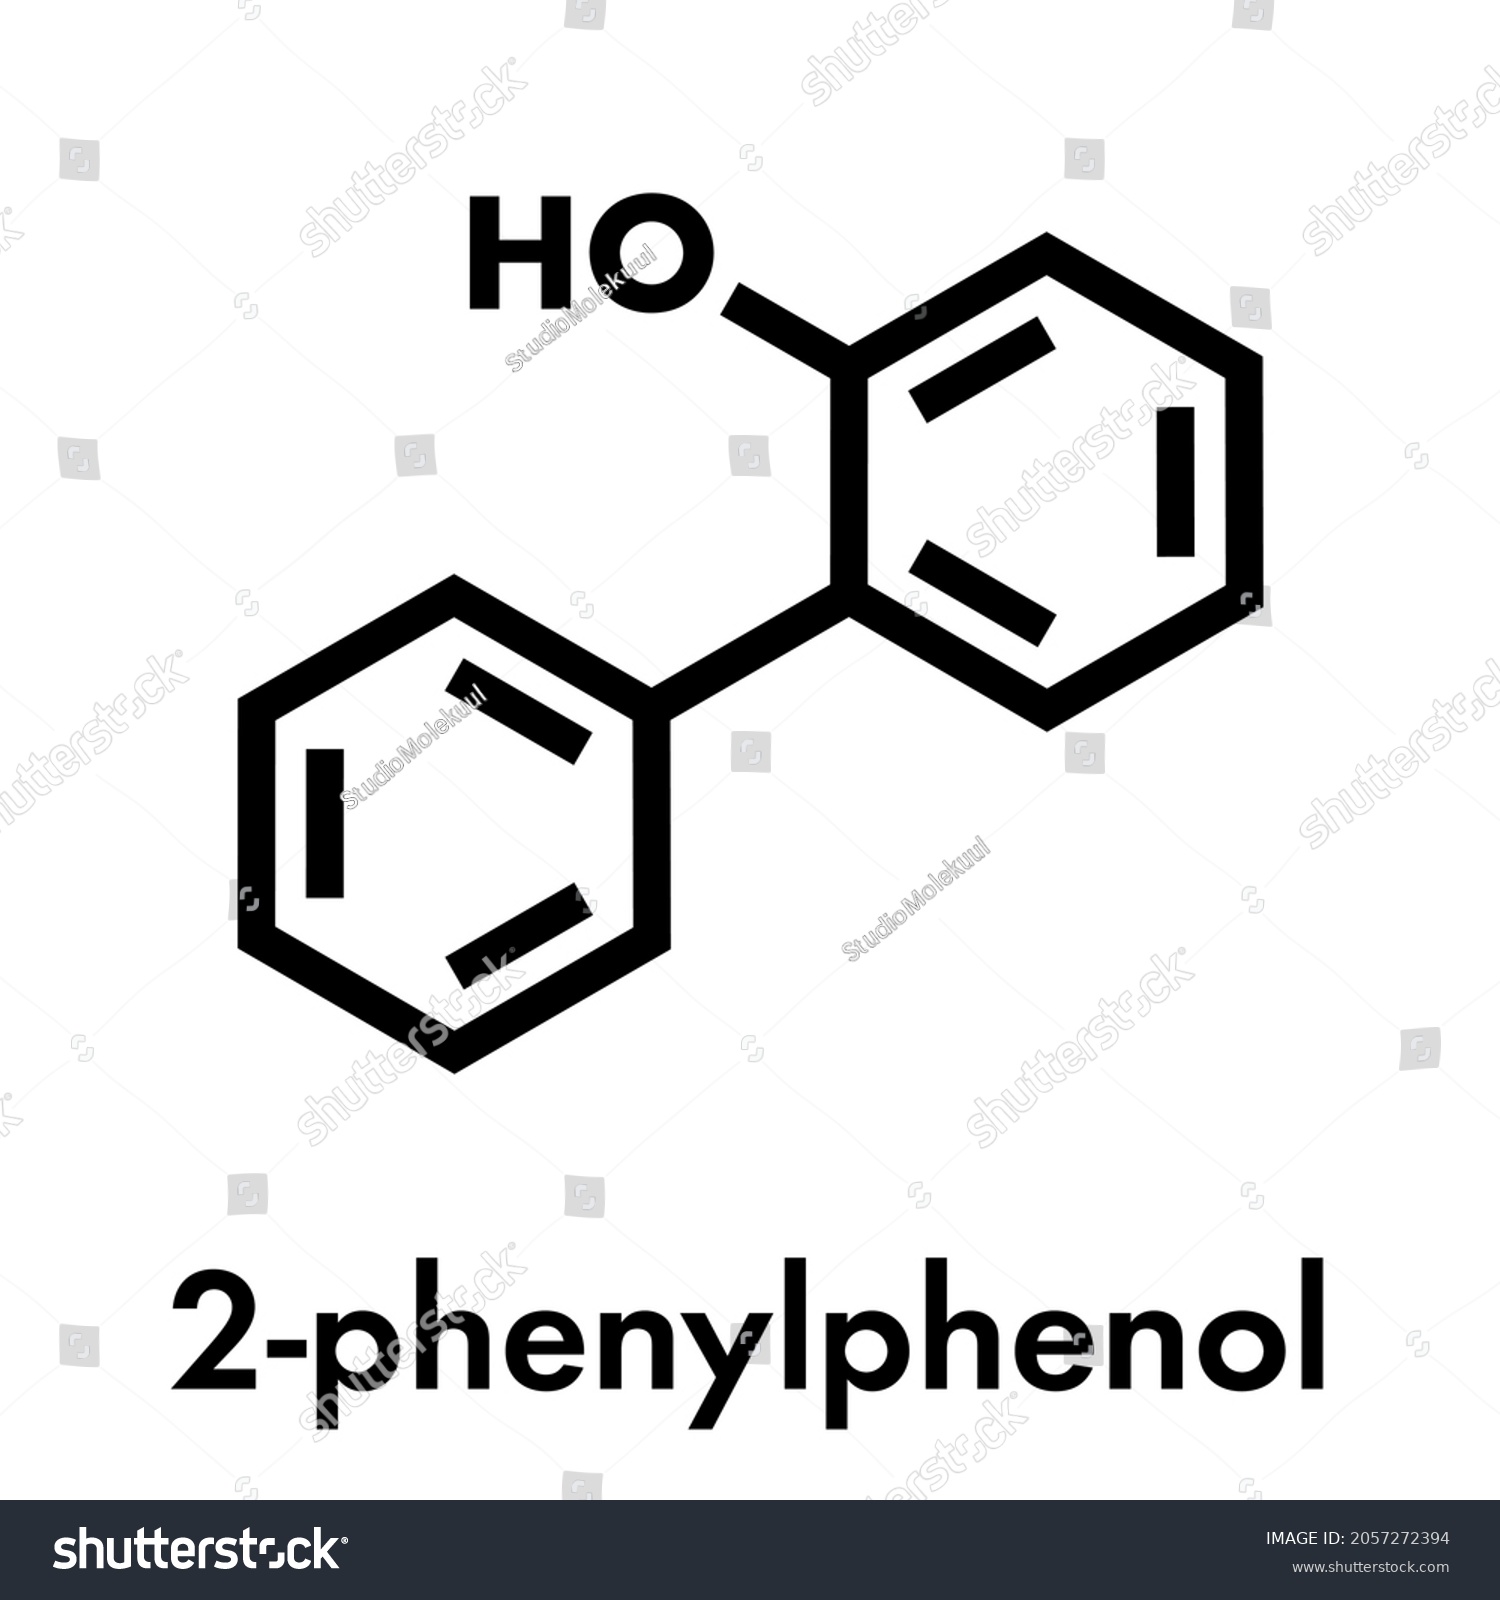 SVG of 2-phenylphenol preservative molecule. Biocide used as food additive, preservative, and disinfectant.  Skeletal formula. svg